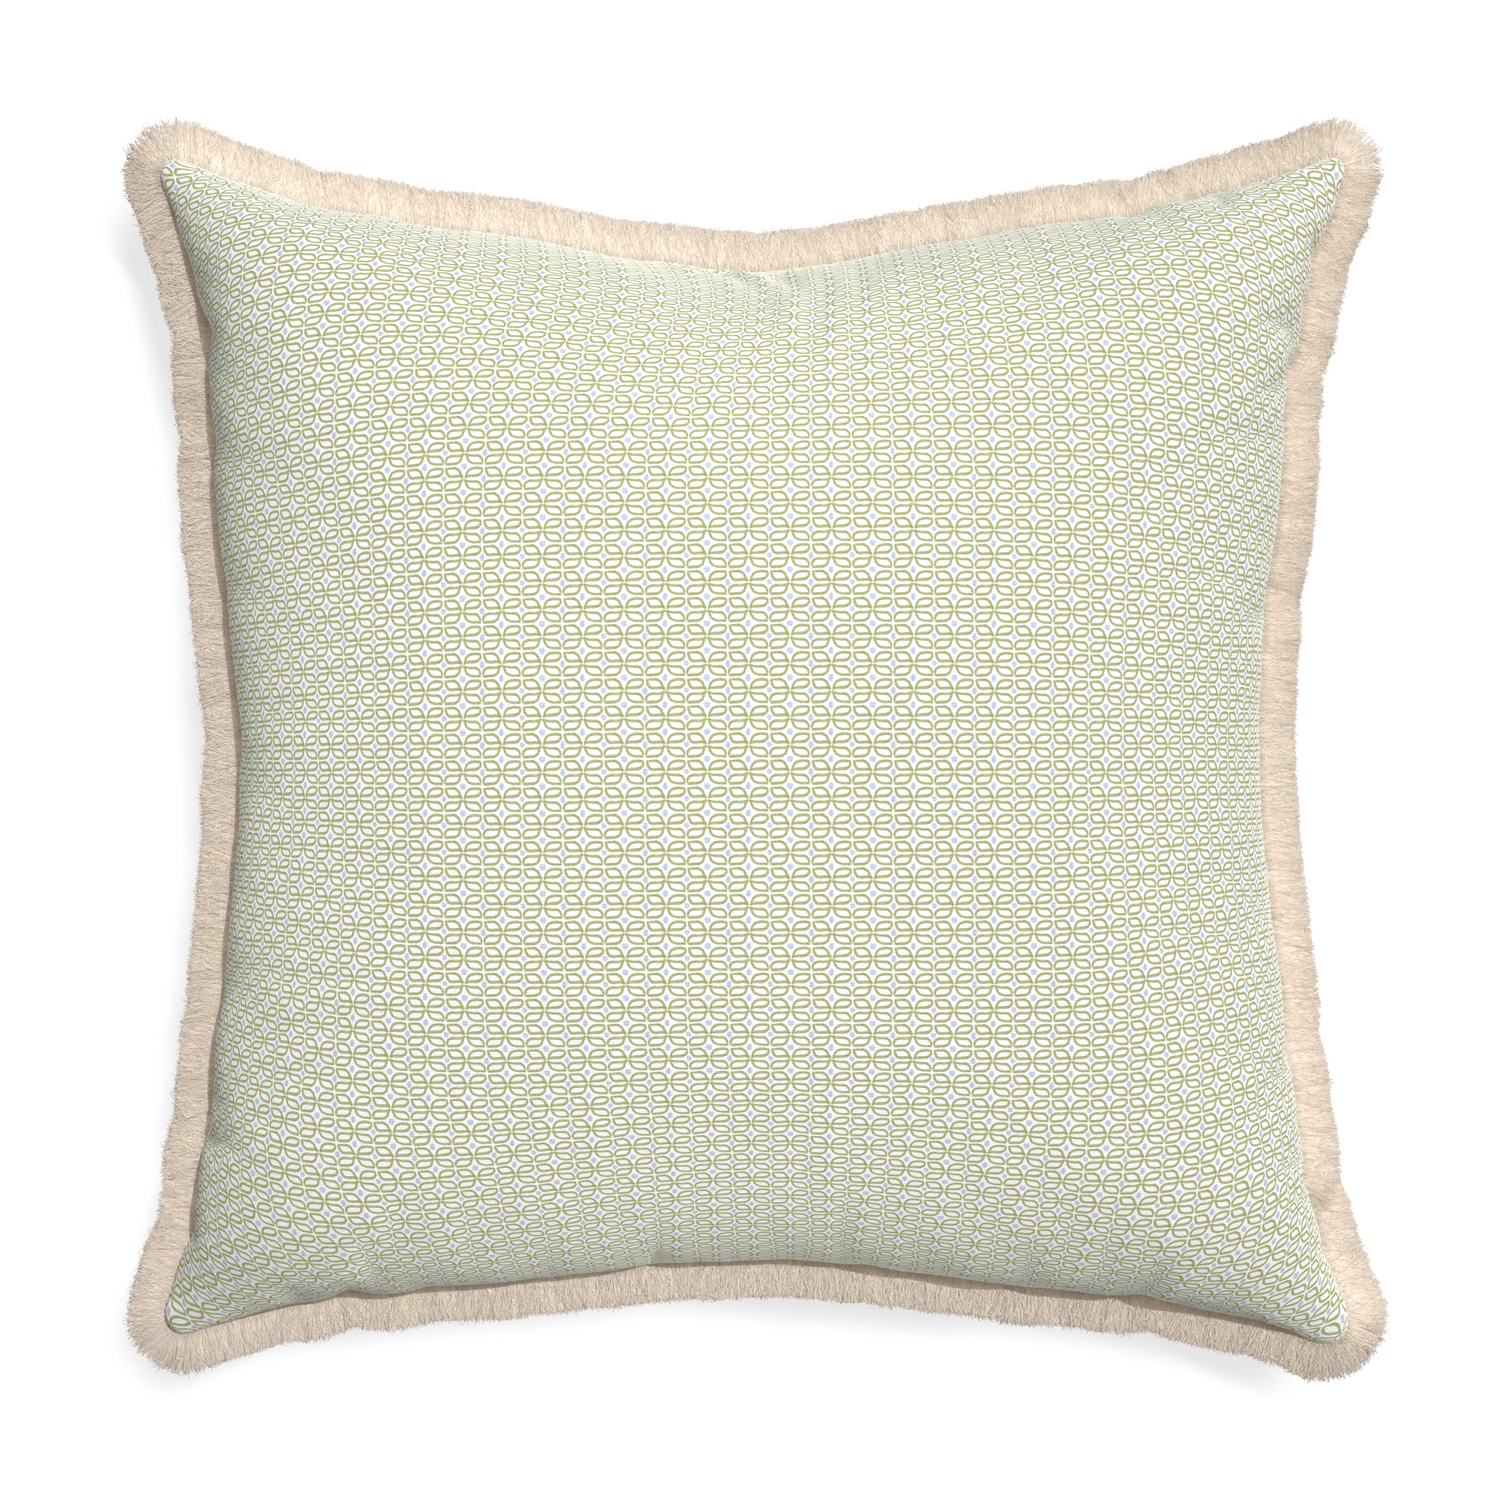 Euro-sham loomi moss custom pillow with cream fringe on white background